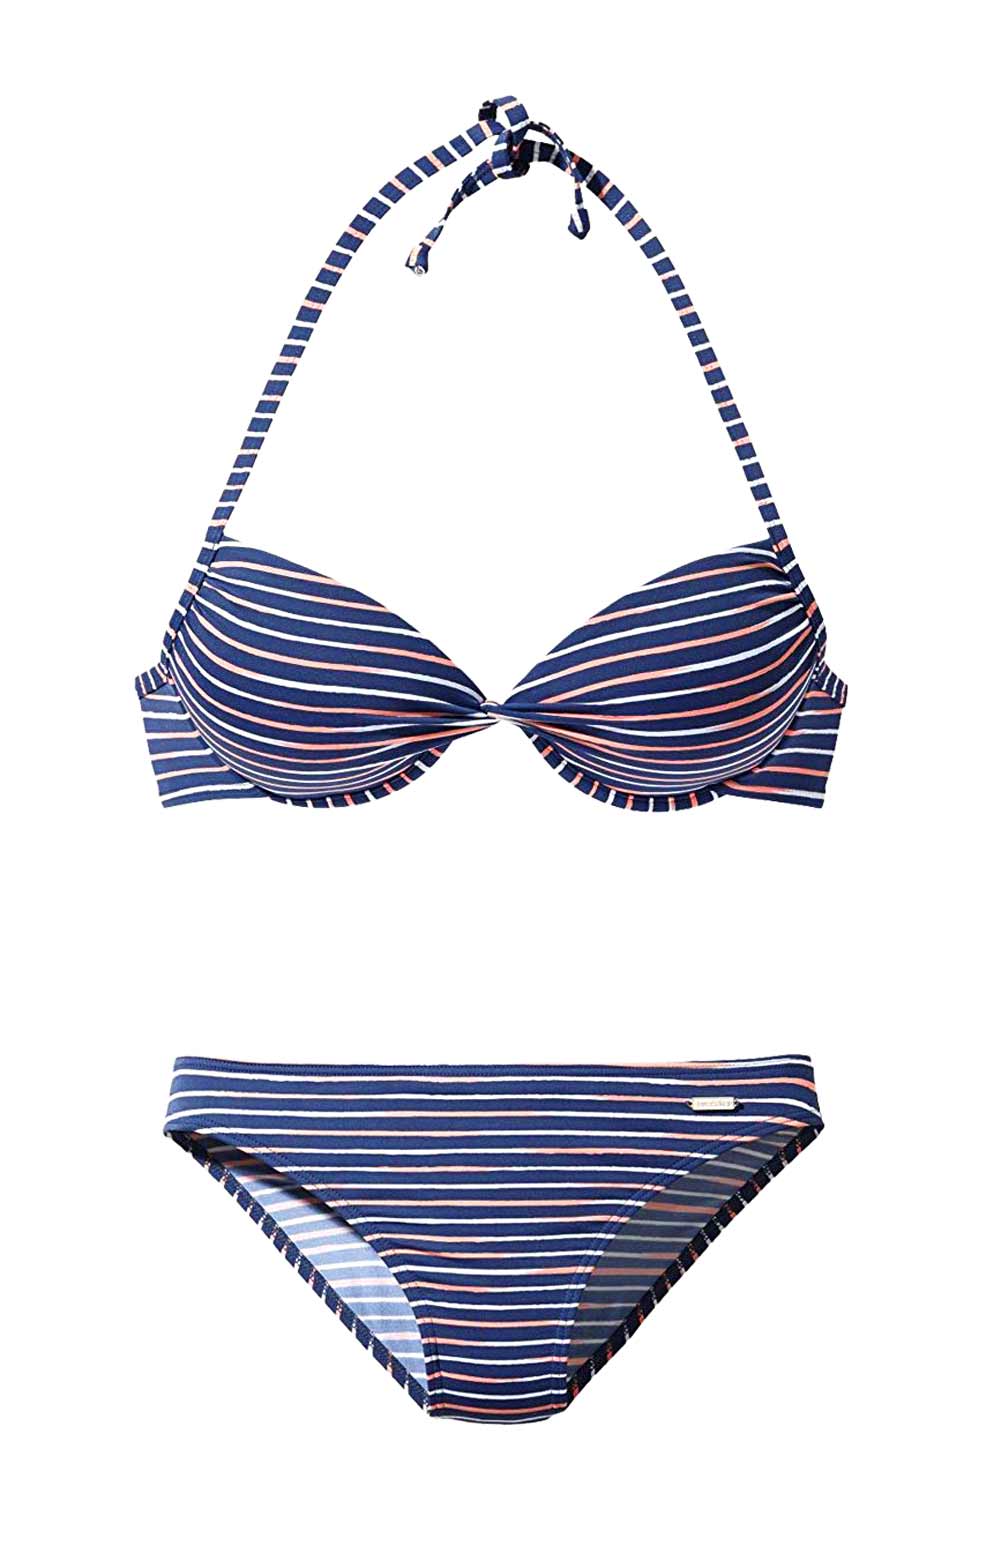 Sunseeker Damen Marken-Push-Up-Bikini, blau-gestreift, A-Cup